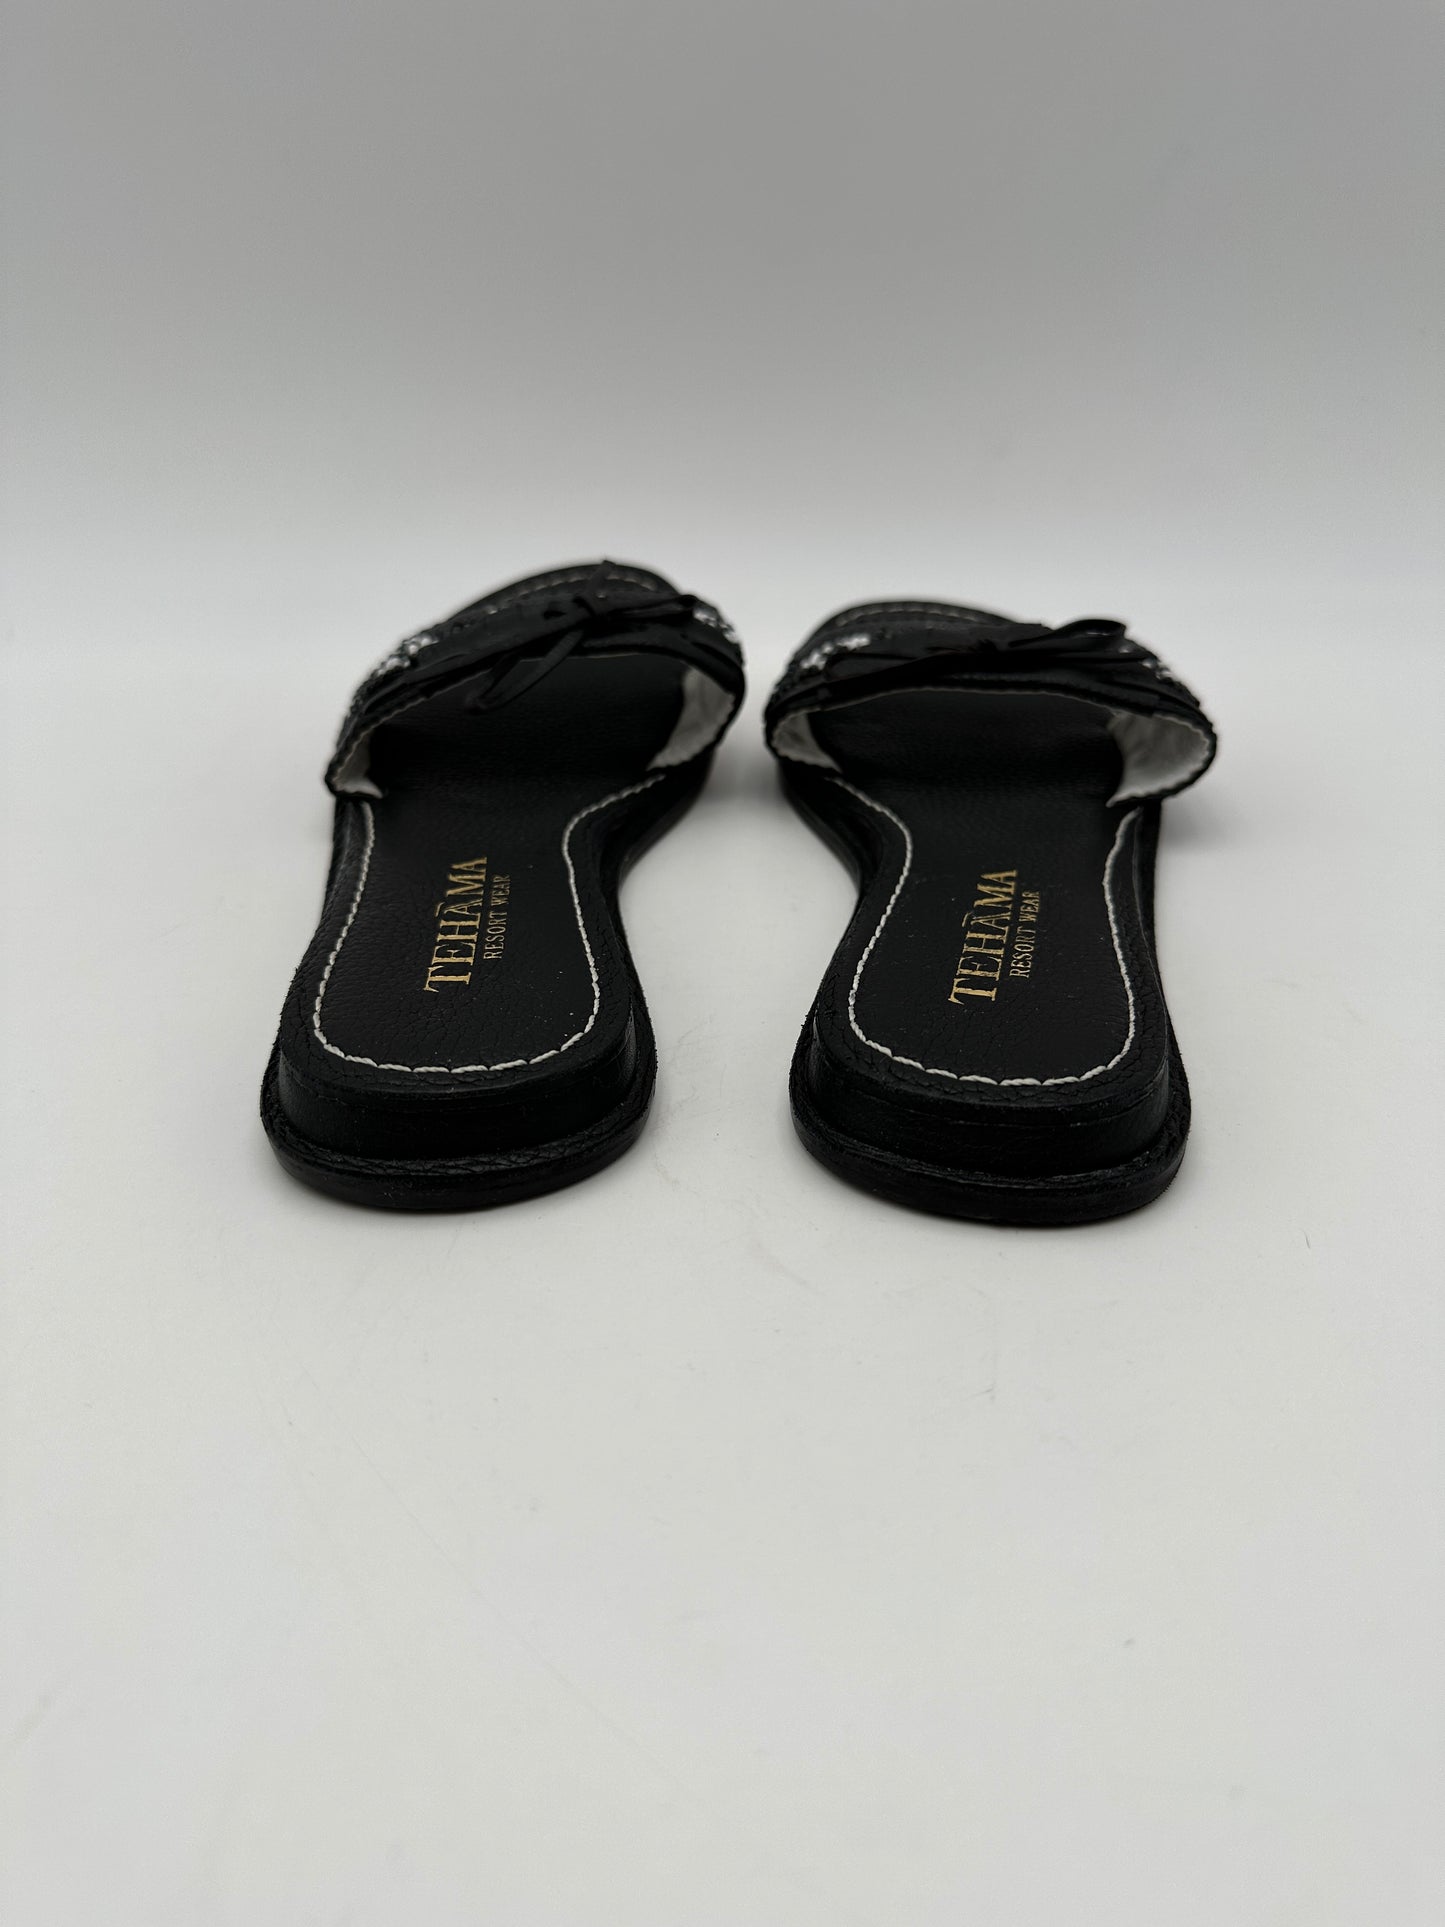 Tehama Resort Wear Size 7 M Black Leather Slip-On Flat Sandals